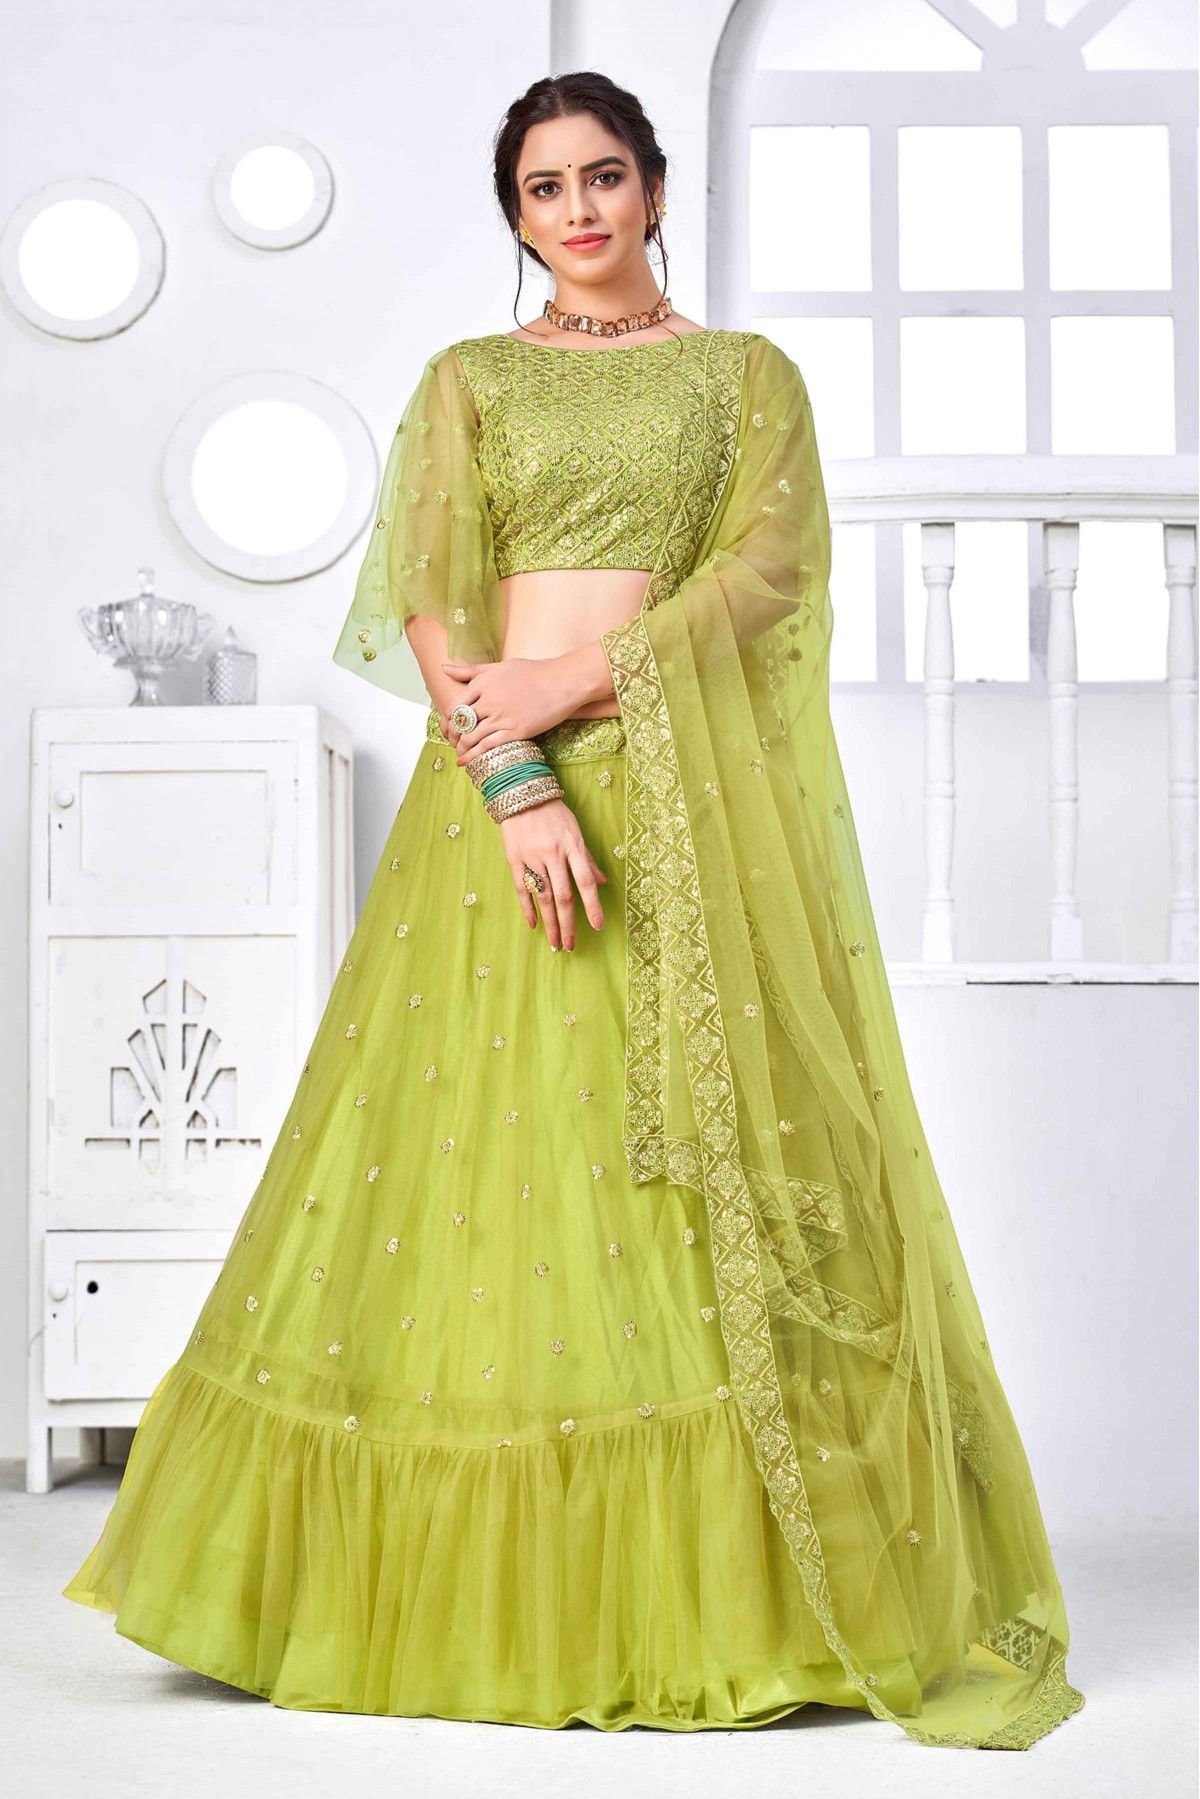 Best georgette light parrot green color Banglori silk bridal lehenga